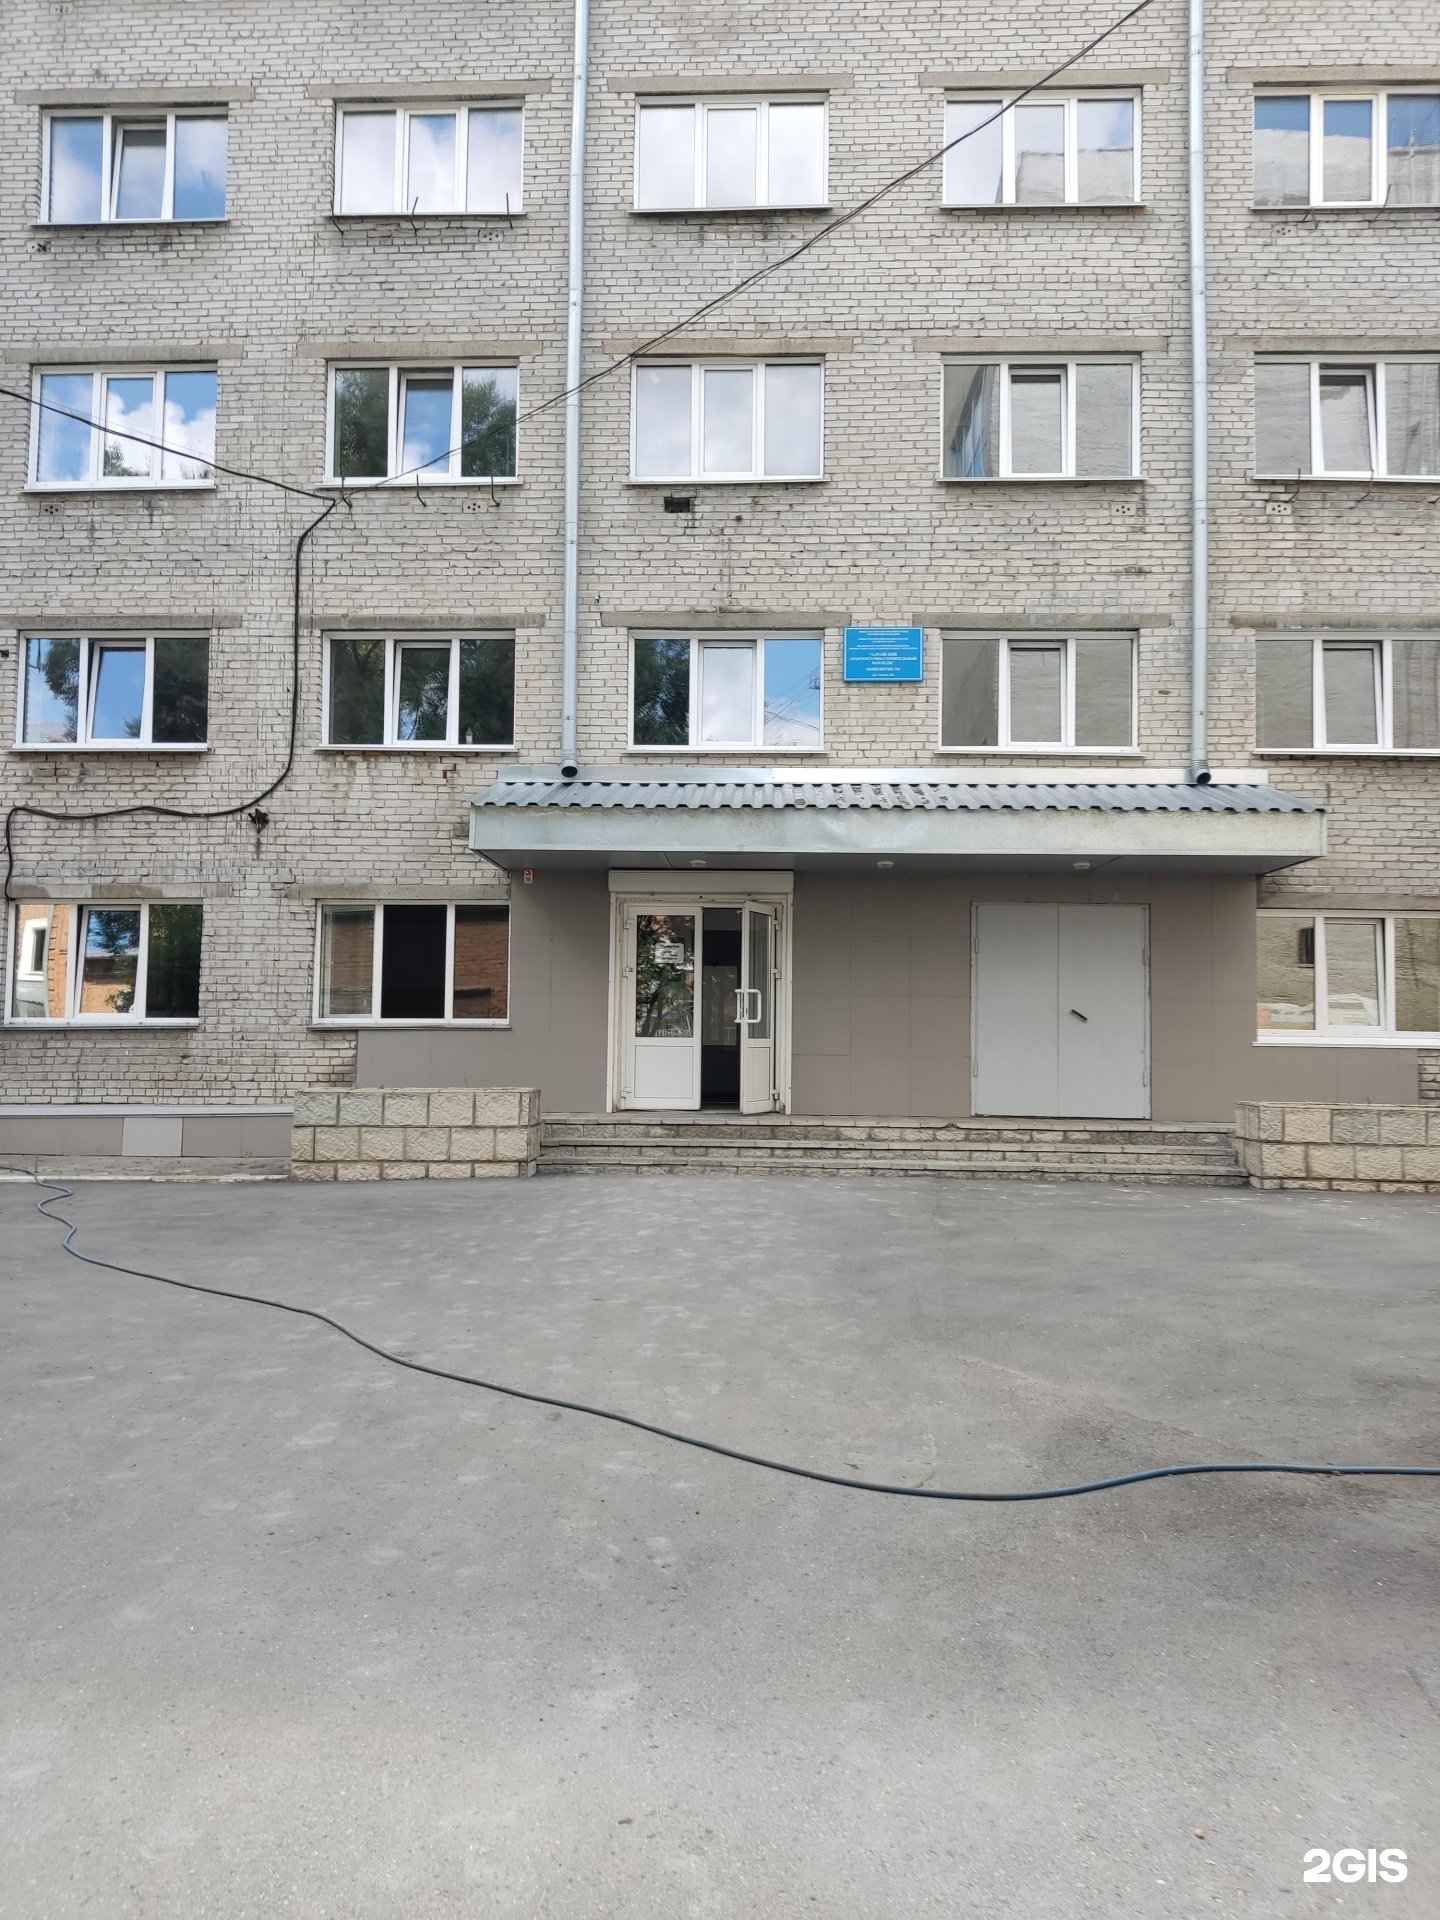 Алтайский архитектурный колледж барнаул